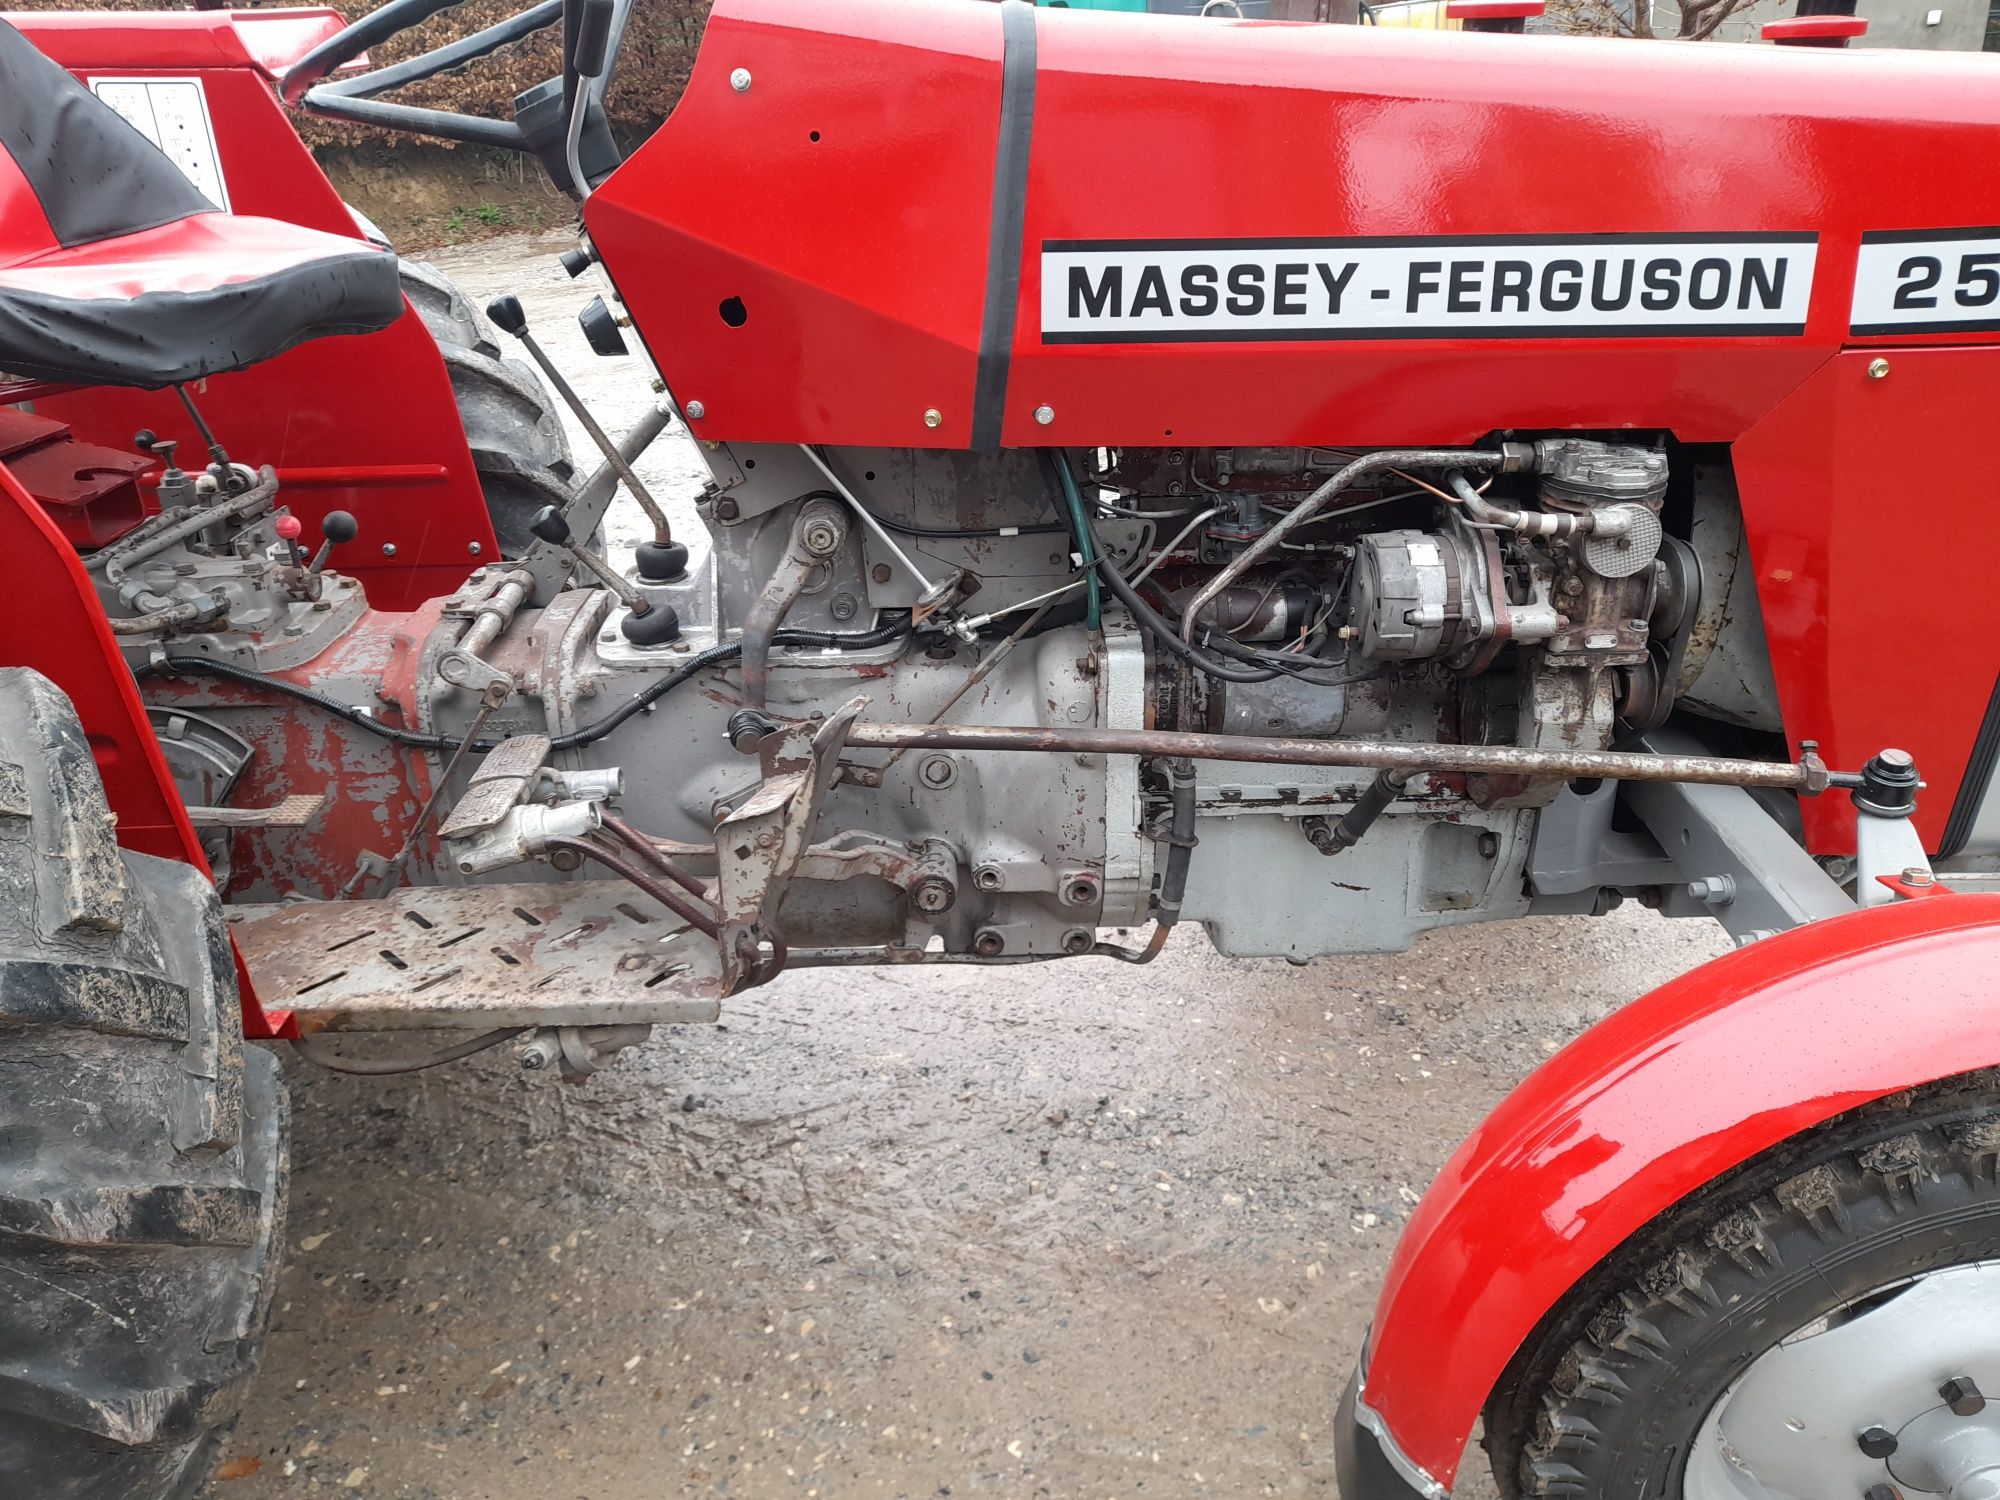 Massey ferguson  225